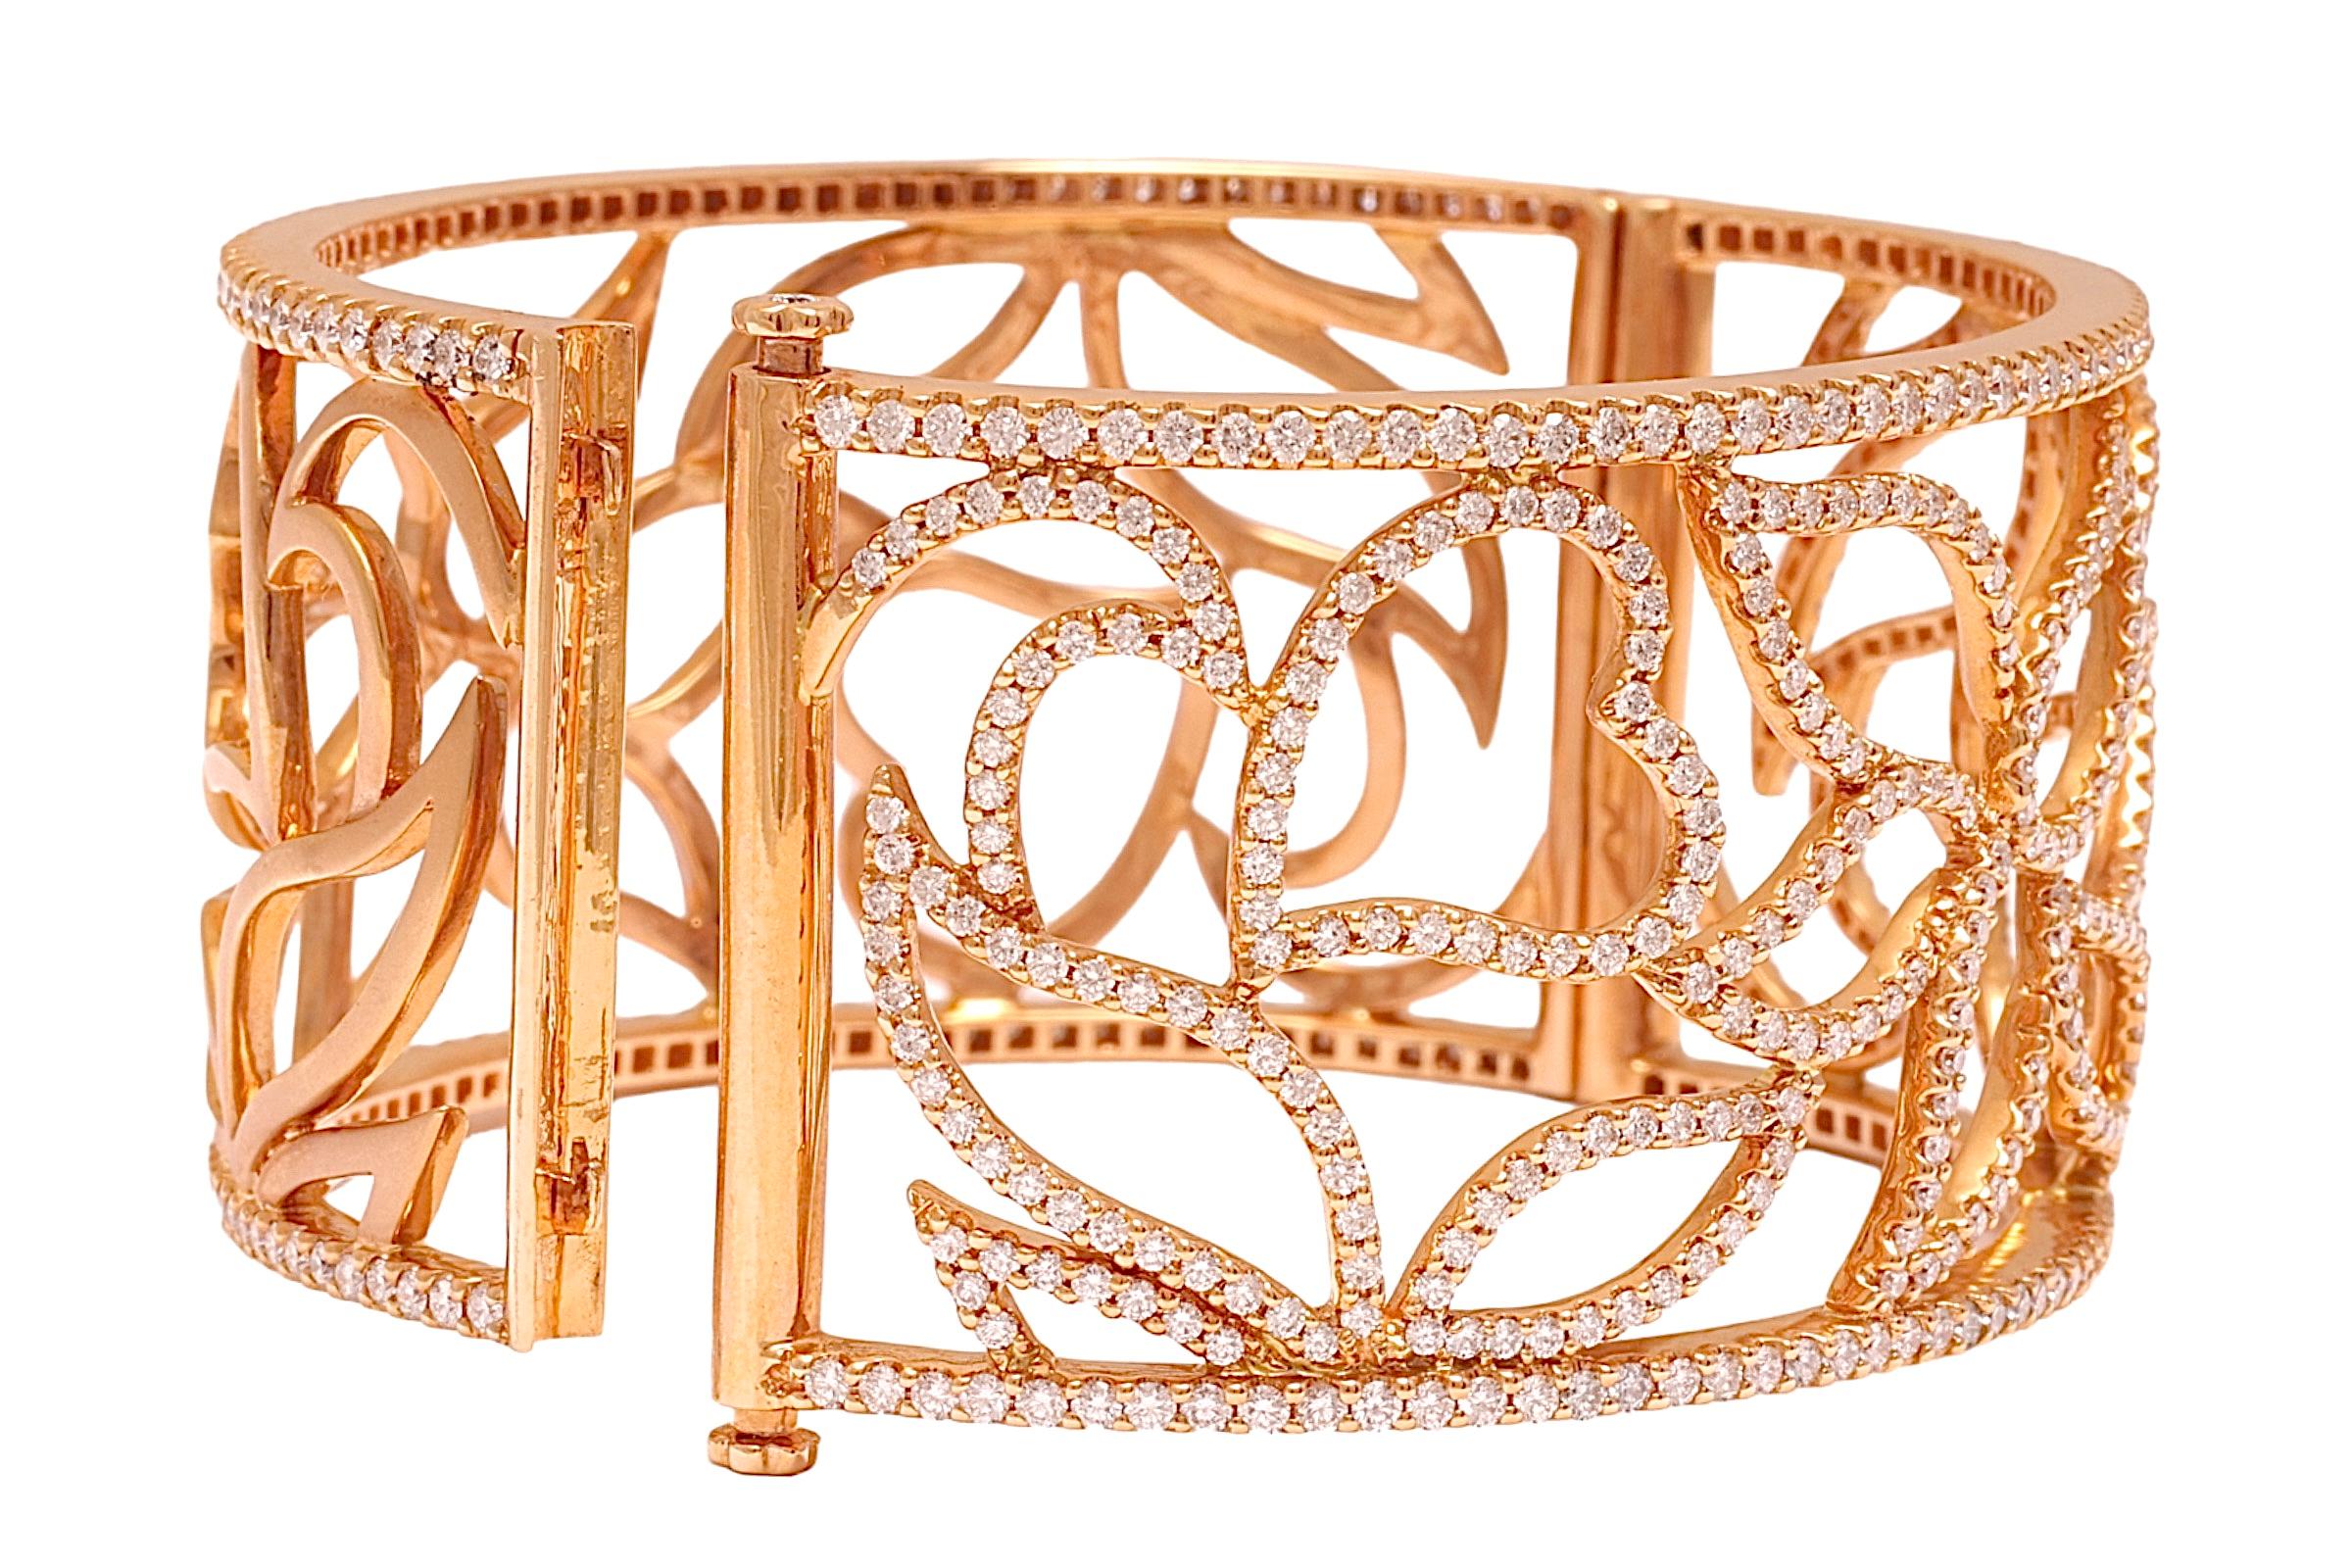 Women's or Men's 18kt Pink Gold Cuff Bracelet, Flower Design, set with 5.87 ct. Diamonds, 2 Sided For Sale